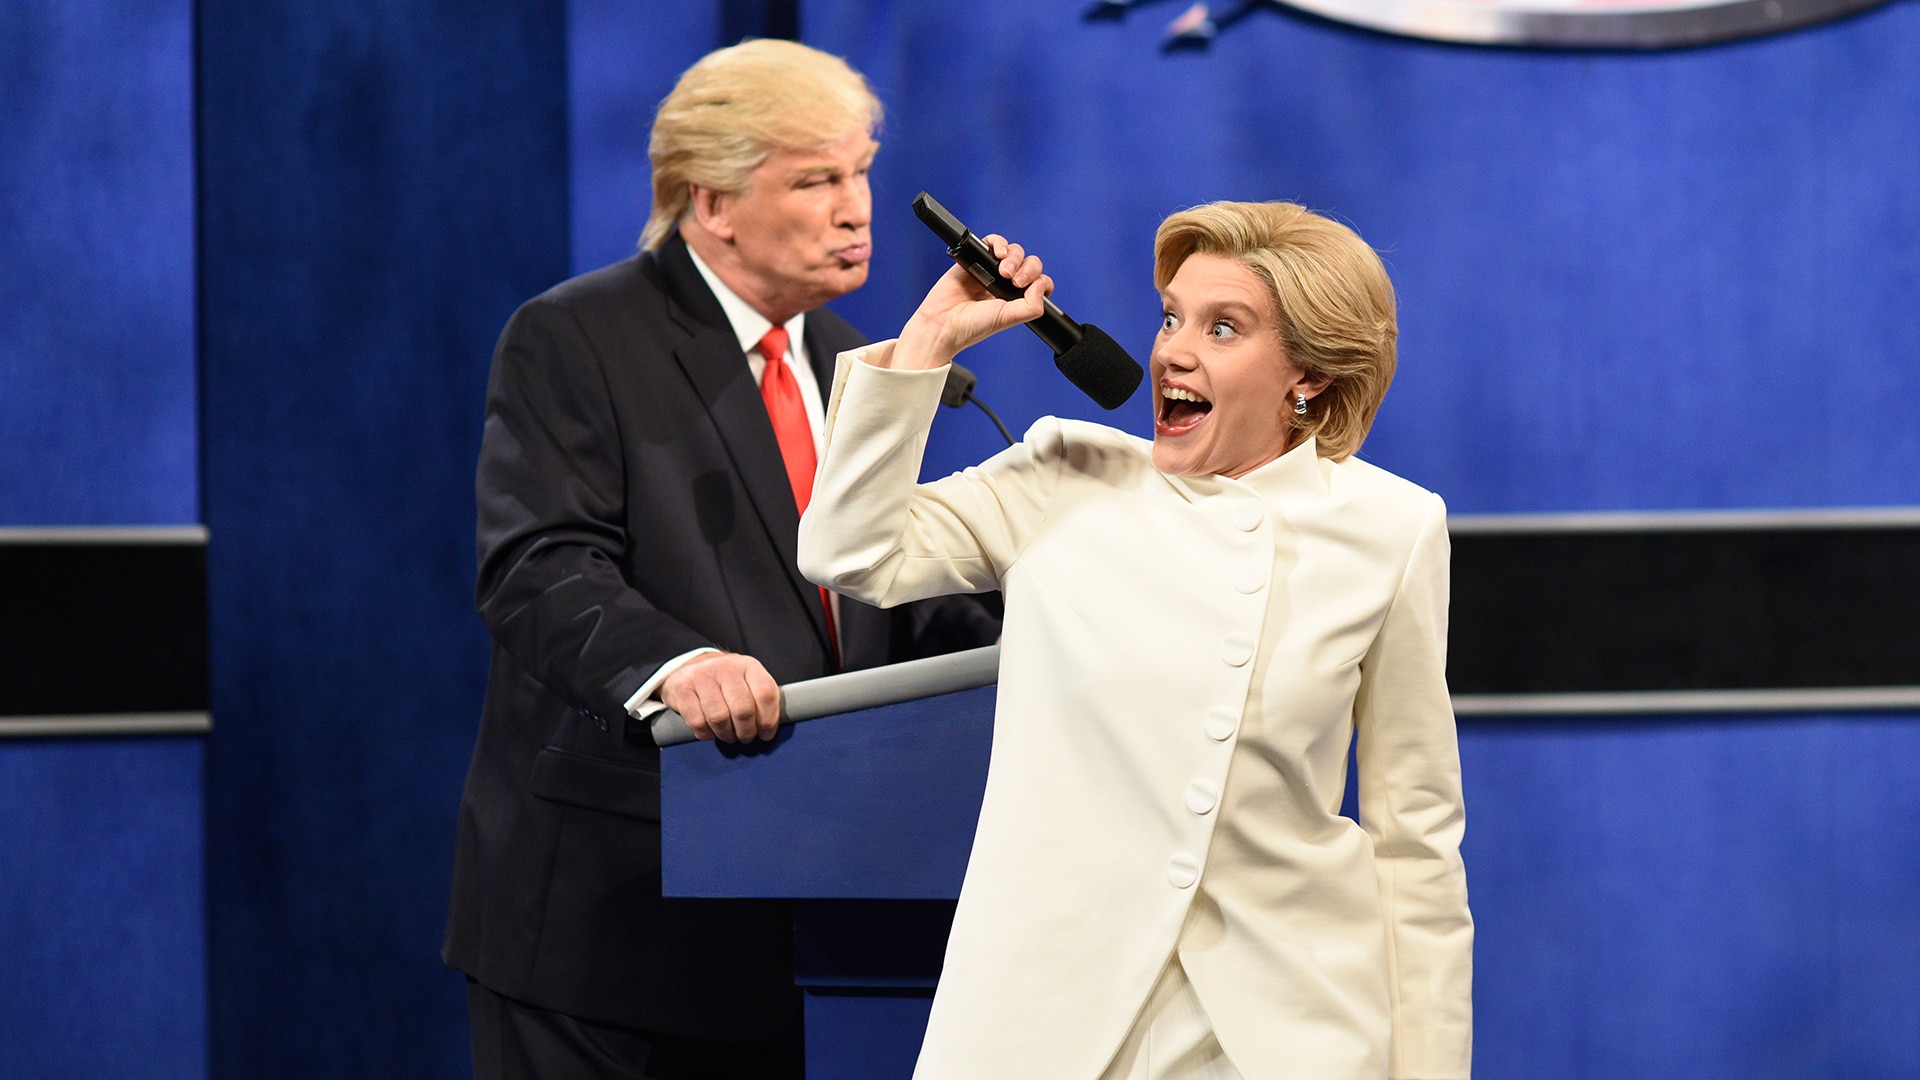 Watch Saturday Night Live Highlight Donald Trump vs. Hillary Clinton